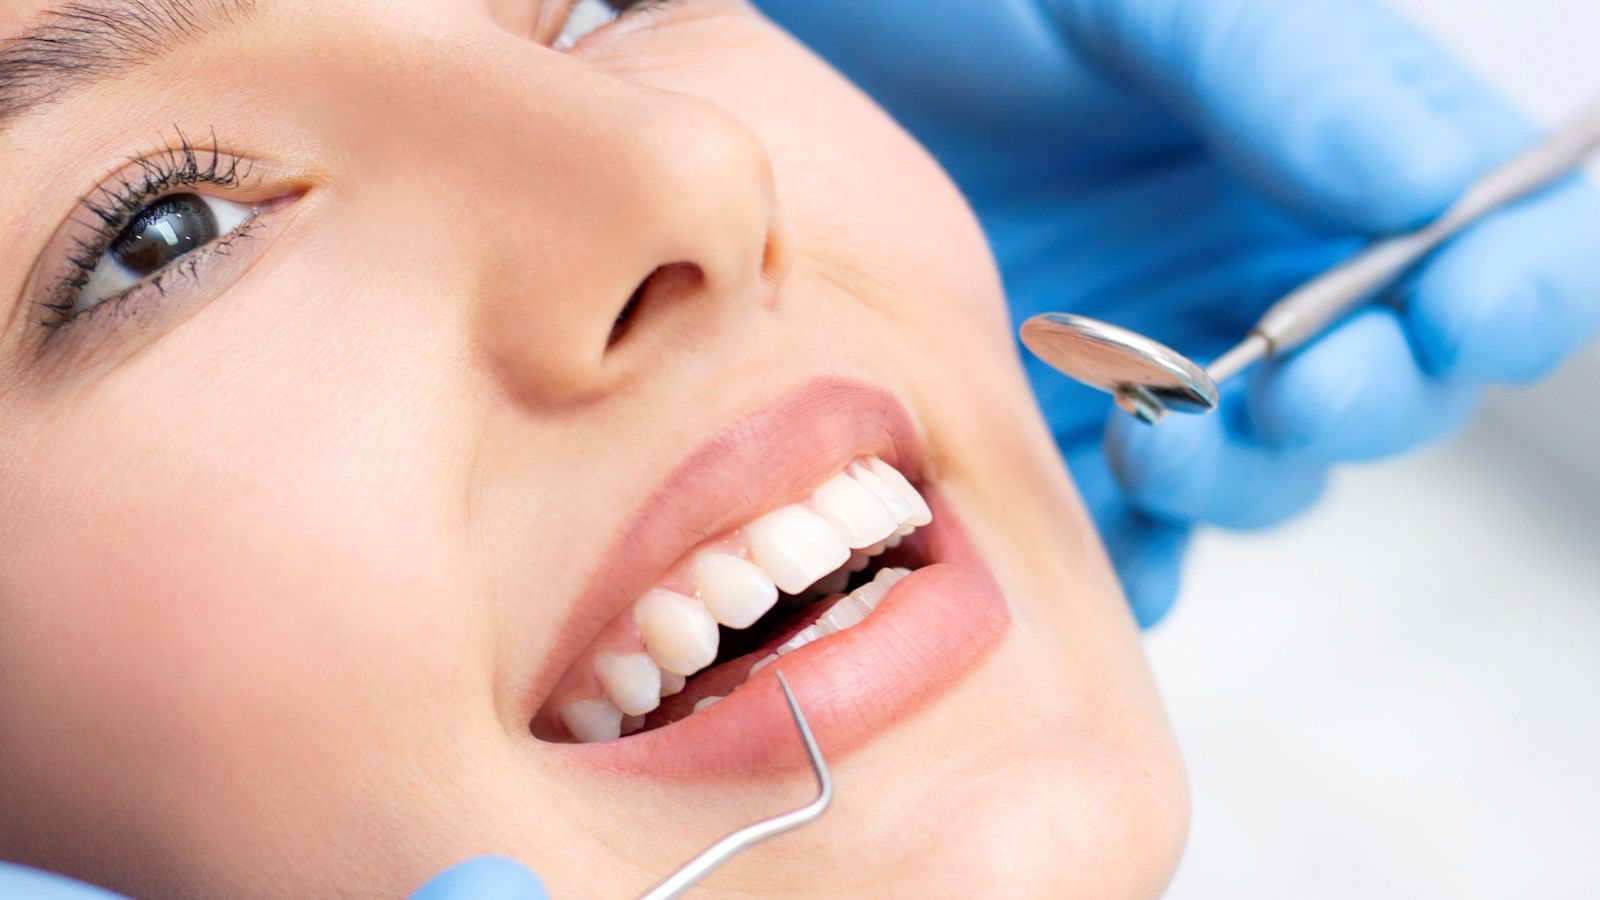 Pasadena Oral Surgery